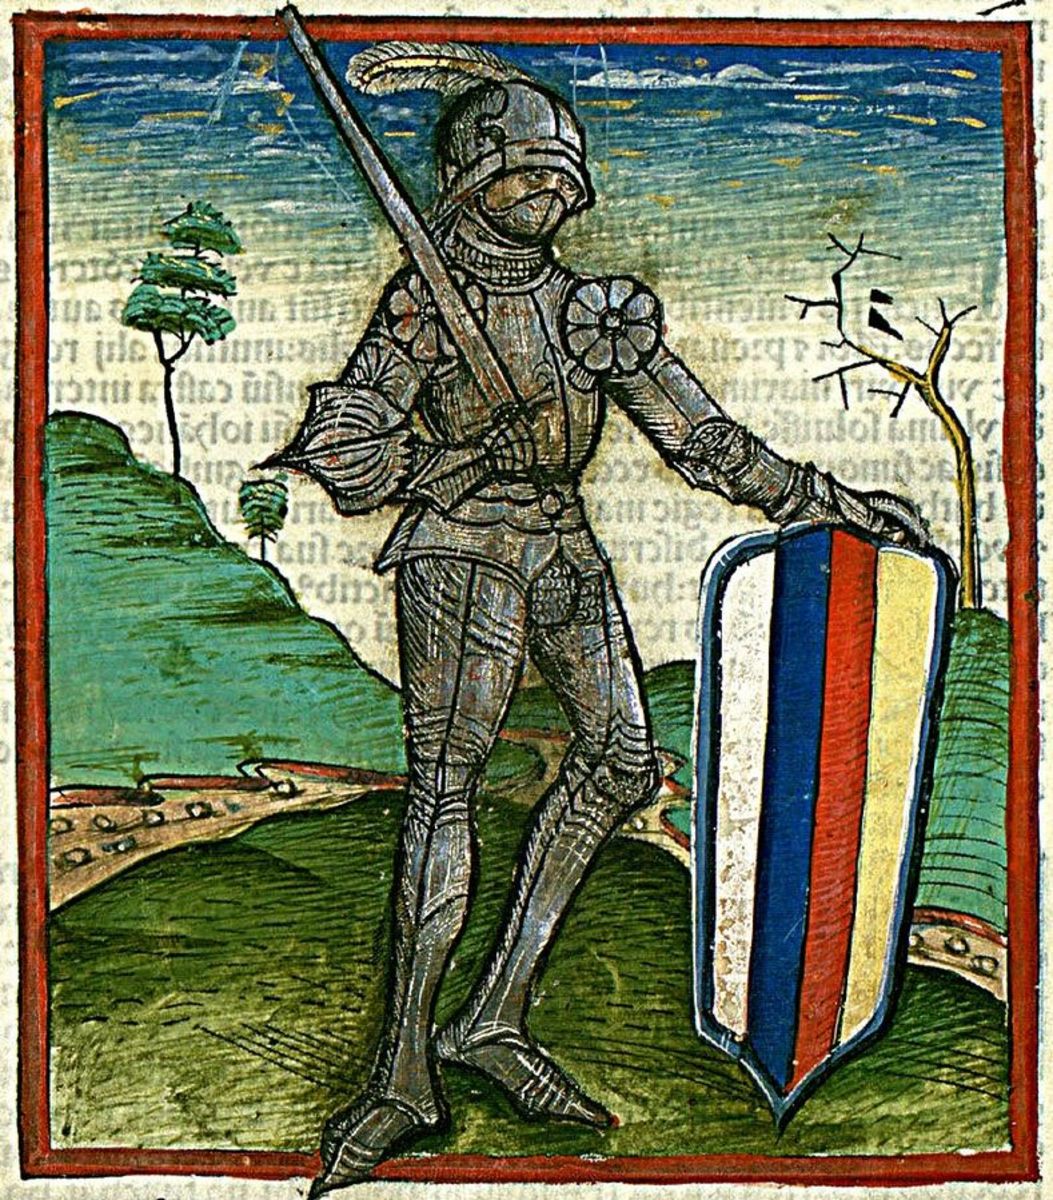 Hunyadi in his armour.